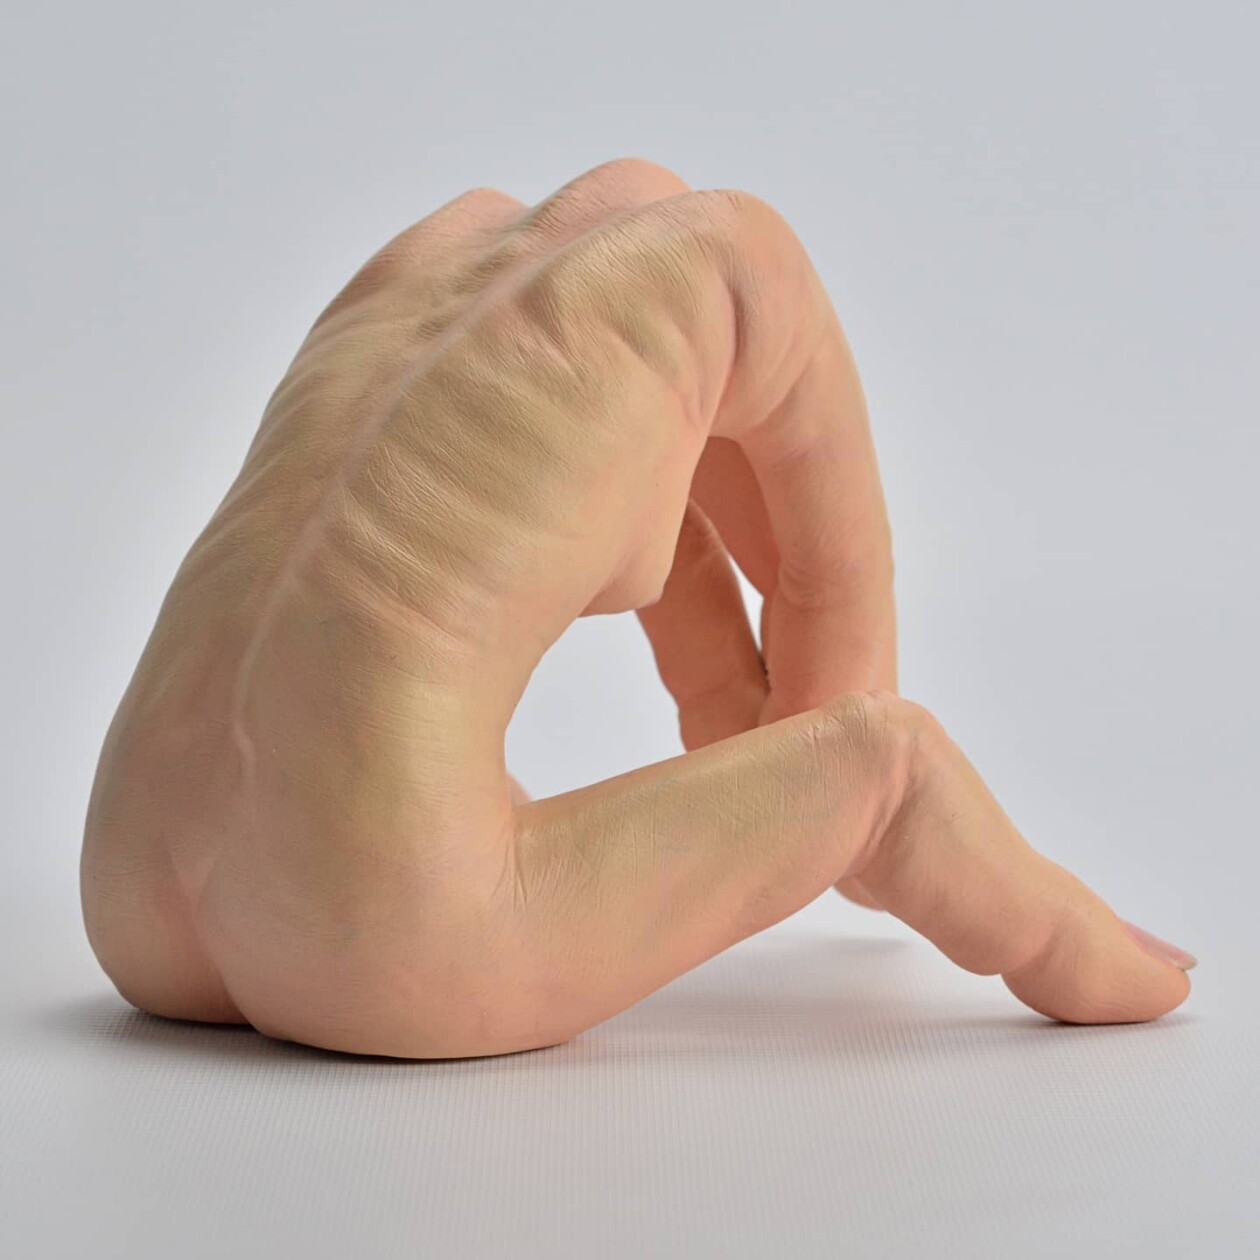 Bizarre Human Anatomy Based Sculptures By Alessandro Boezio (16)